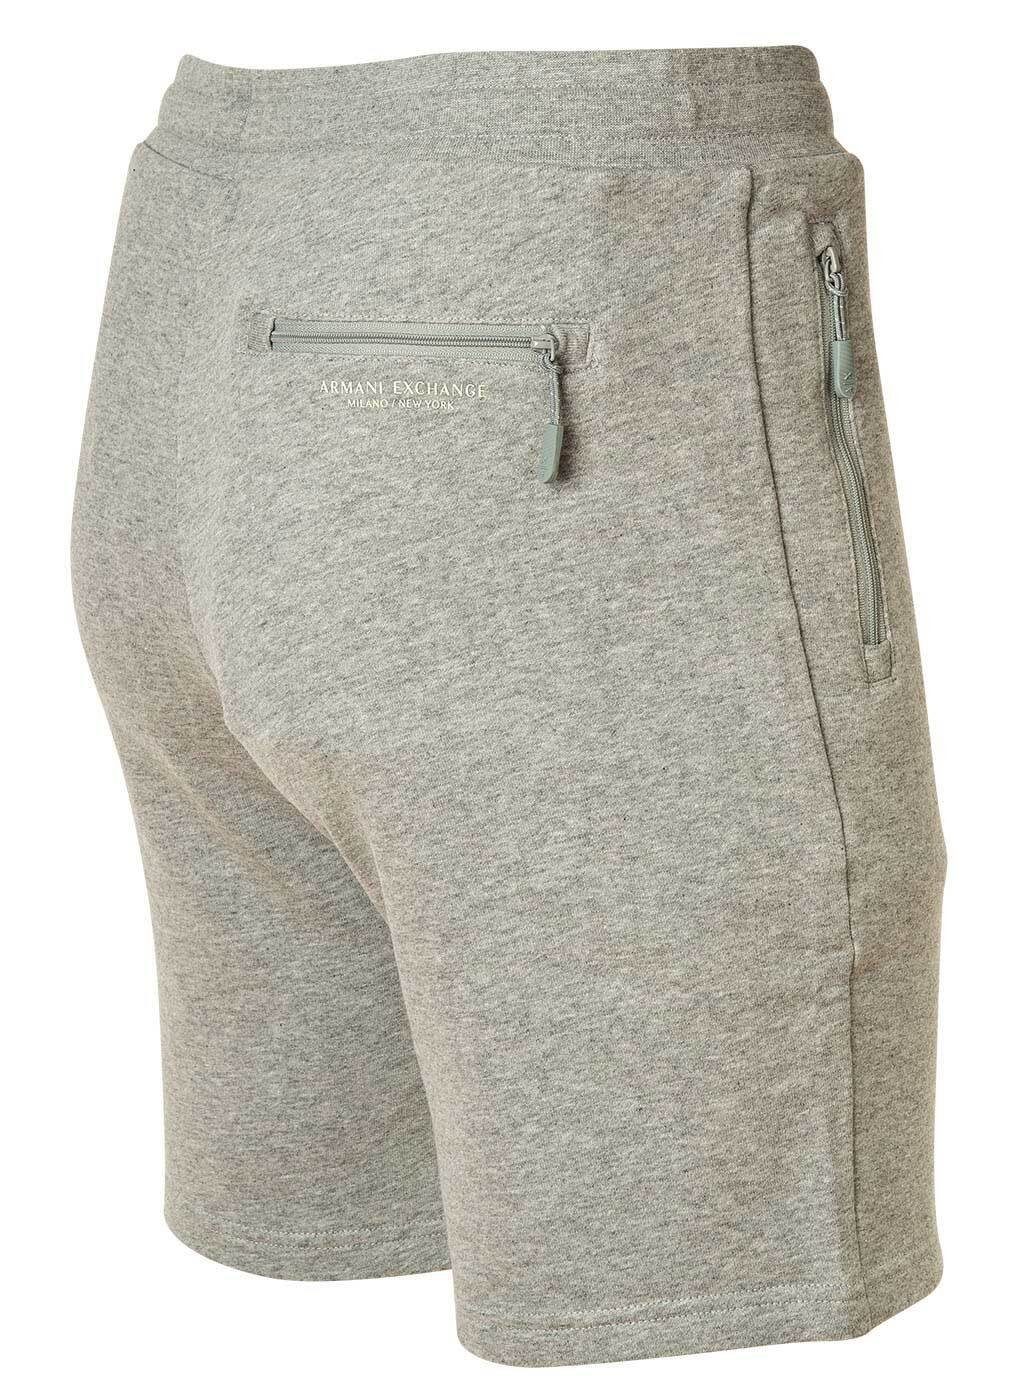 ARMANI EXCHANGE Sweatshorts - Herren Grau Pants, kurz Jogginghose Loungewear